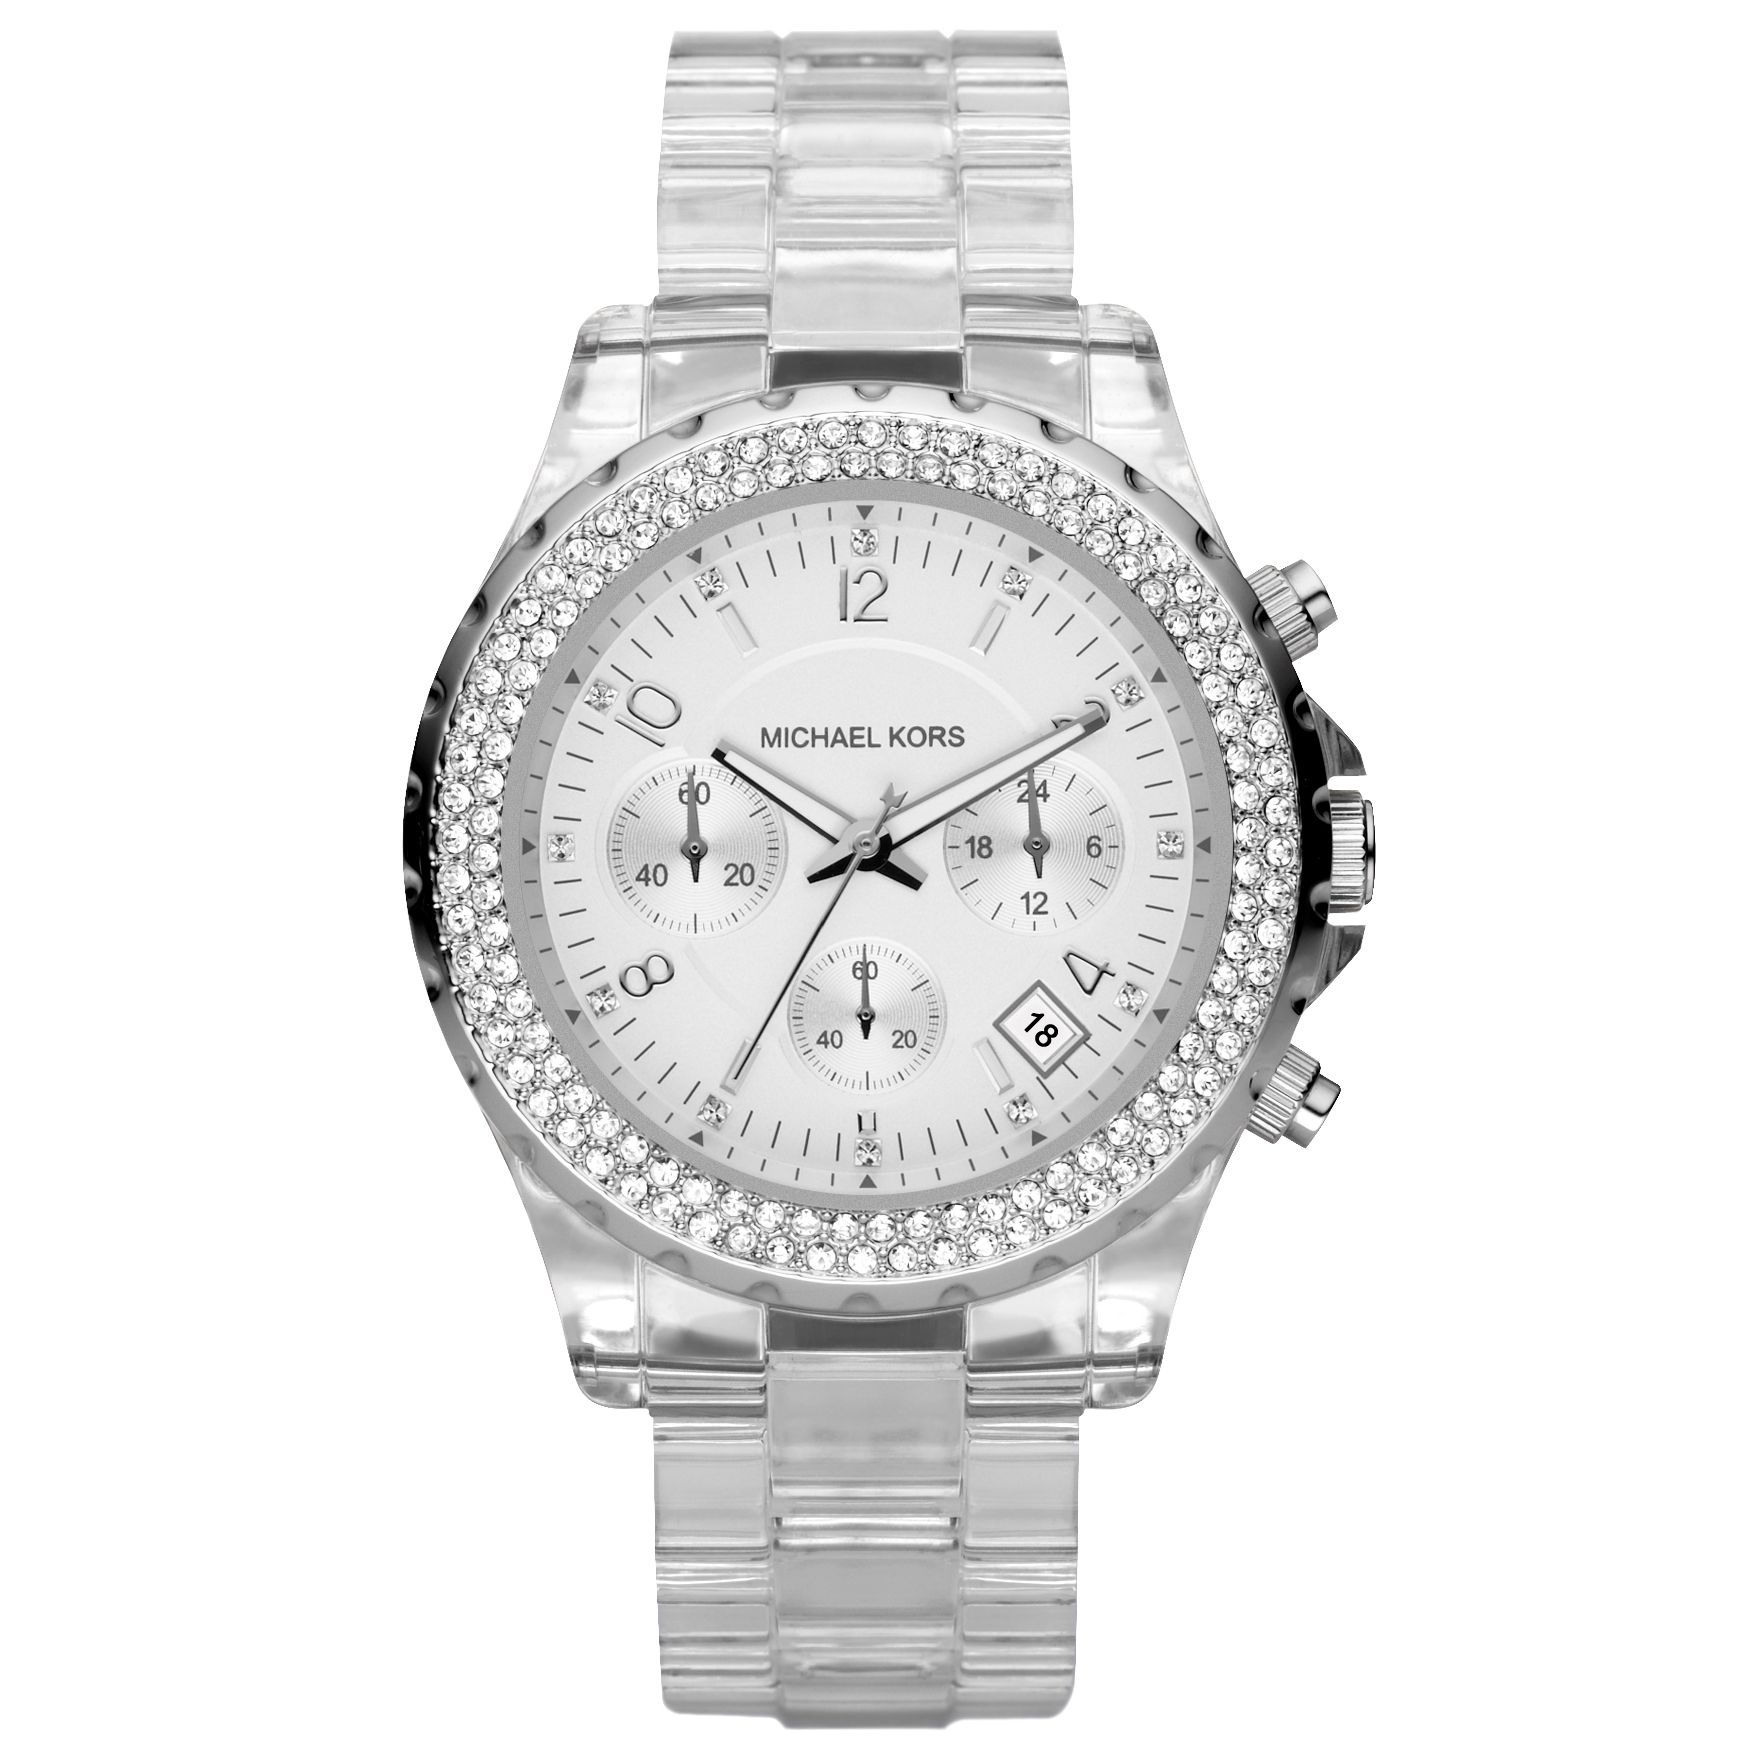 Michael Kors MK5337 Women's Round Chronograph Bracelet Watch at John Lewis